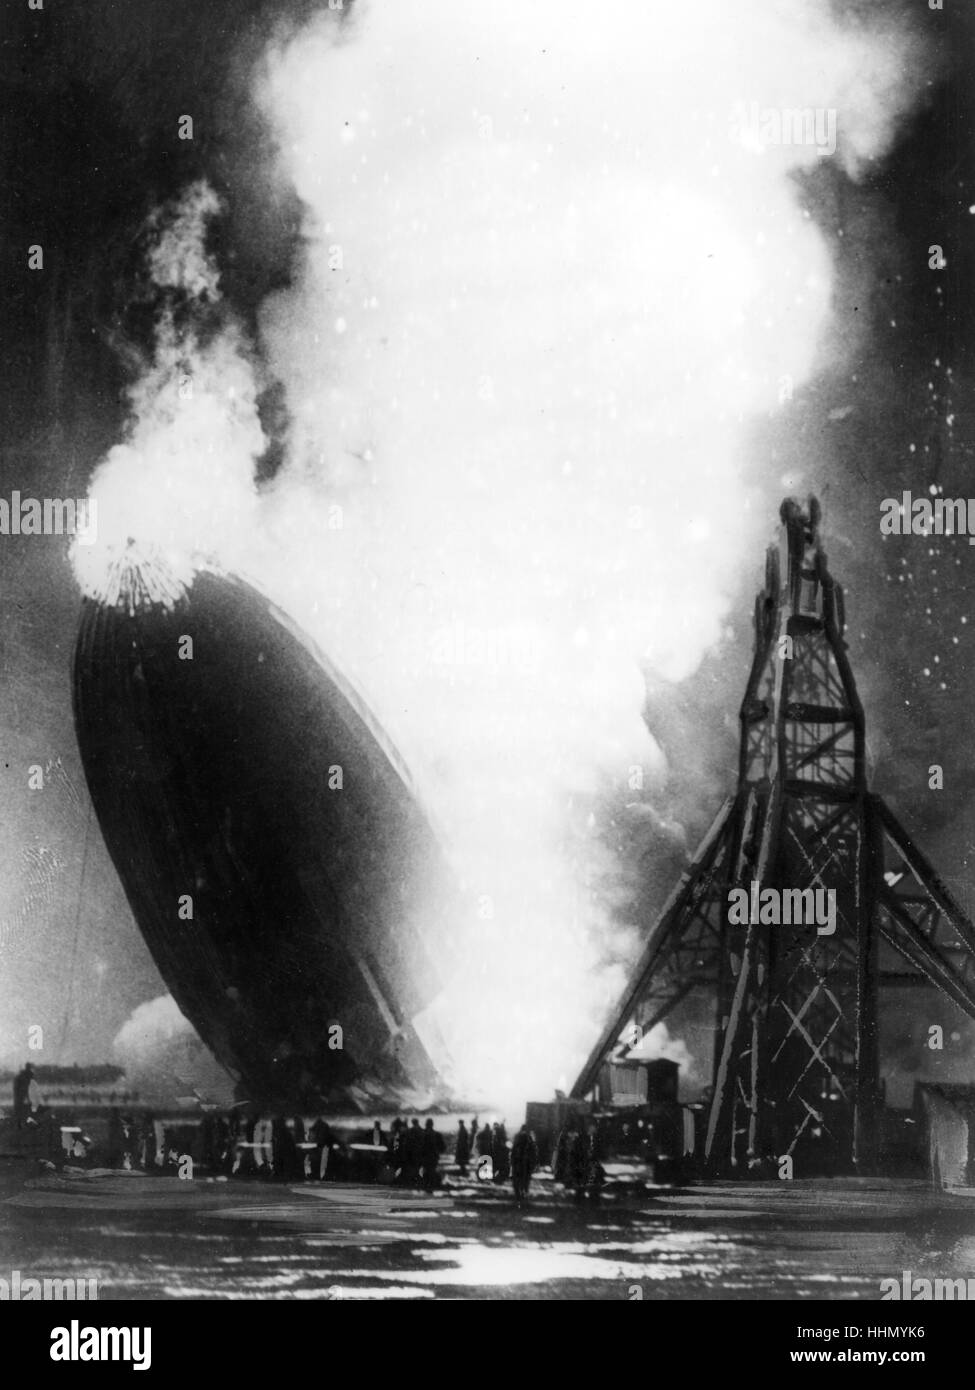 Hindenburg disastro, lakehust Naval Air Station, new jersey, USA, 1937 Foto Stock